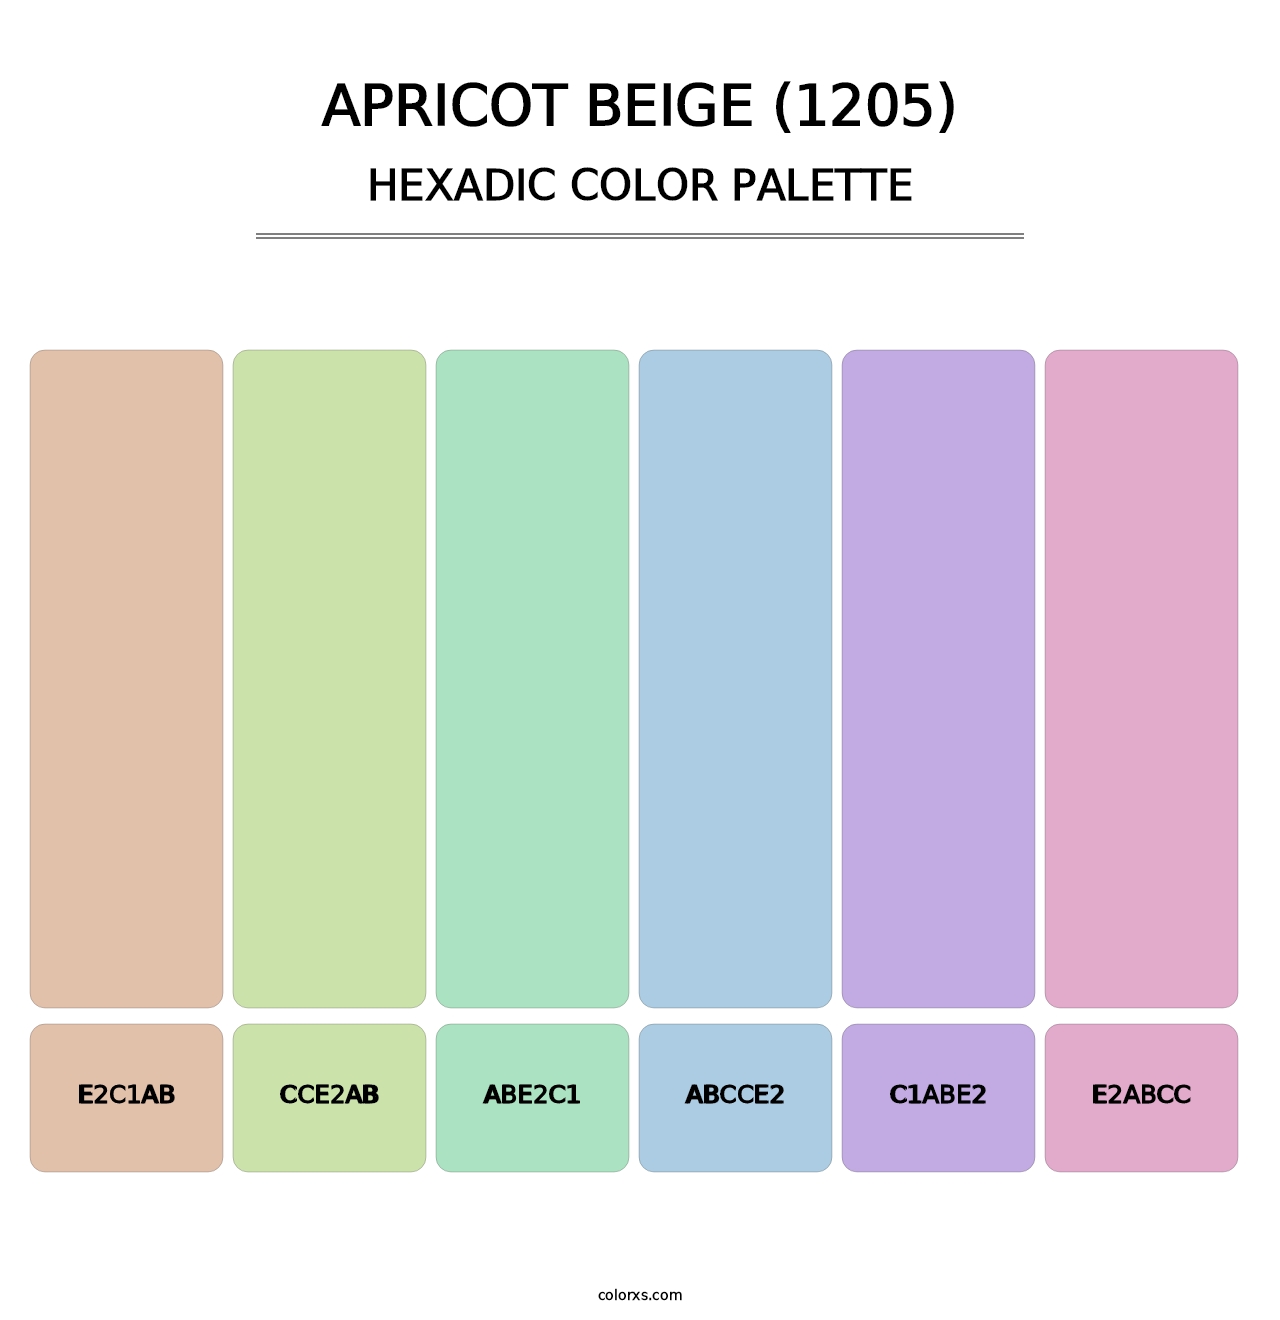 Apricot Beige (1205) - Hexadic Color Palette